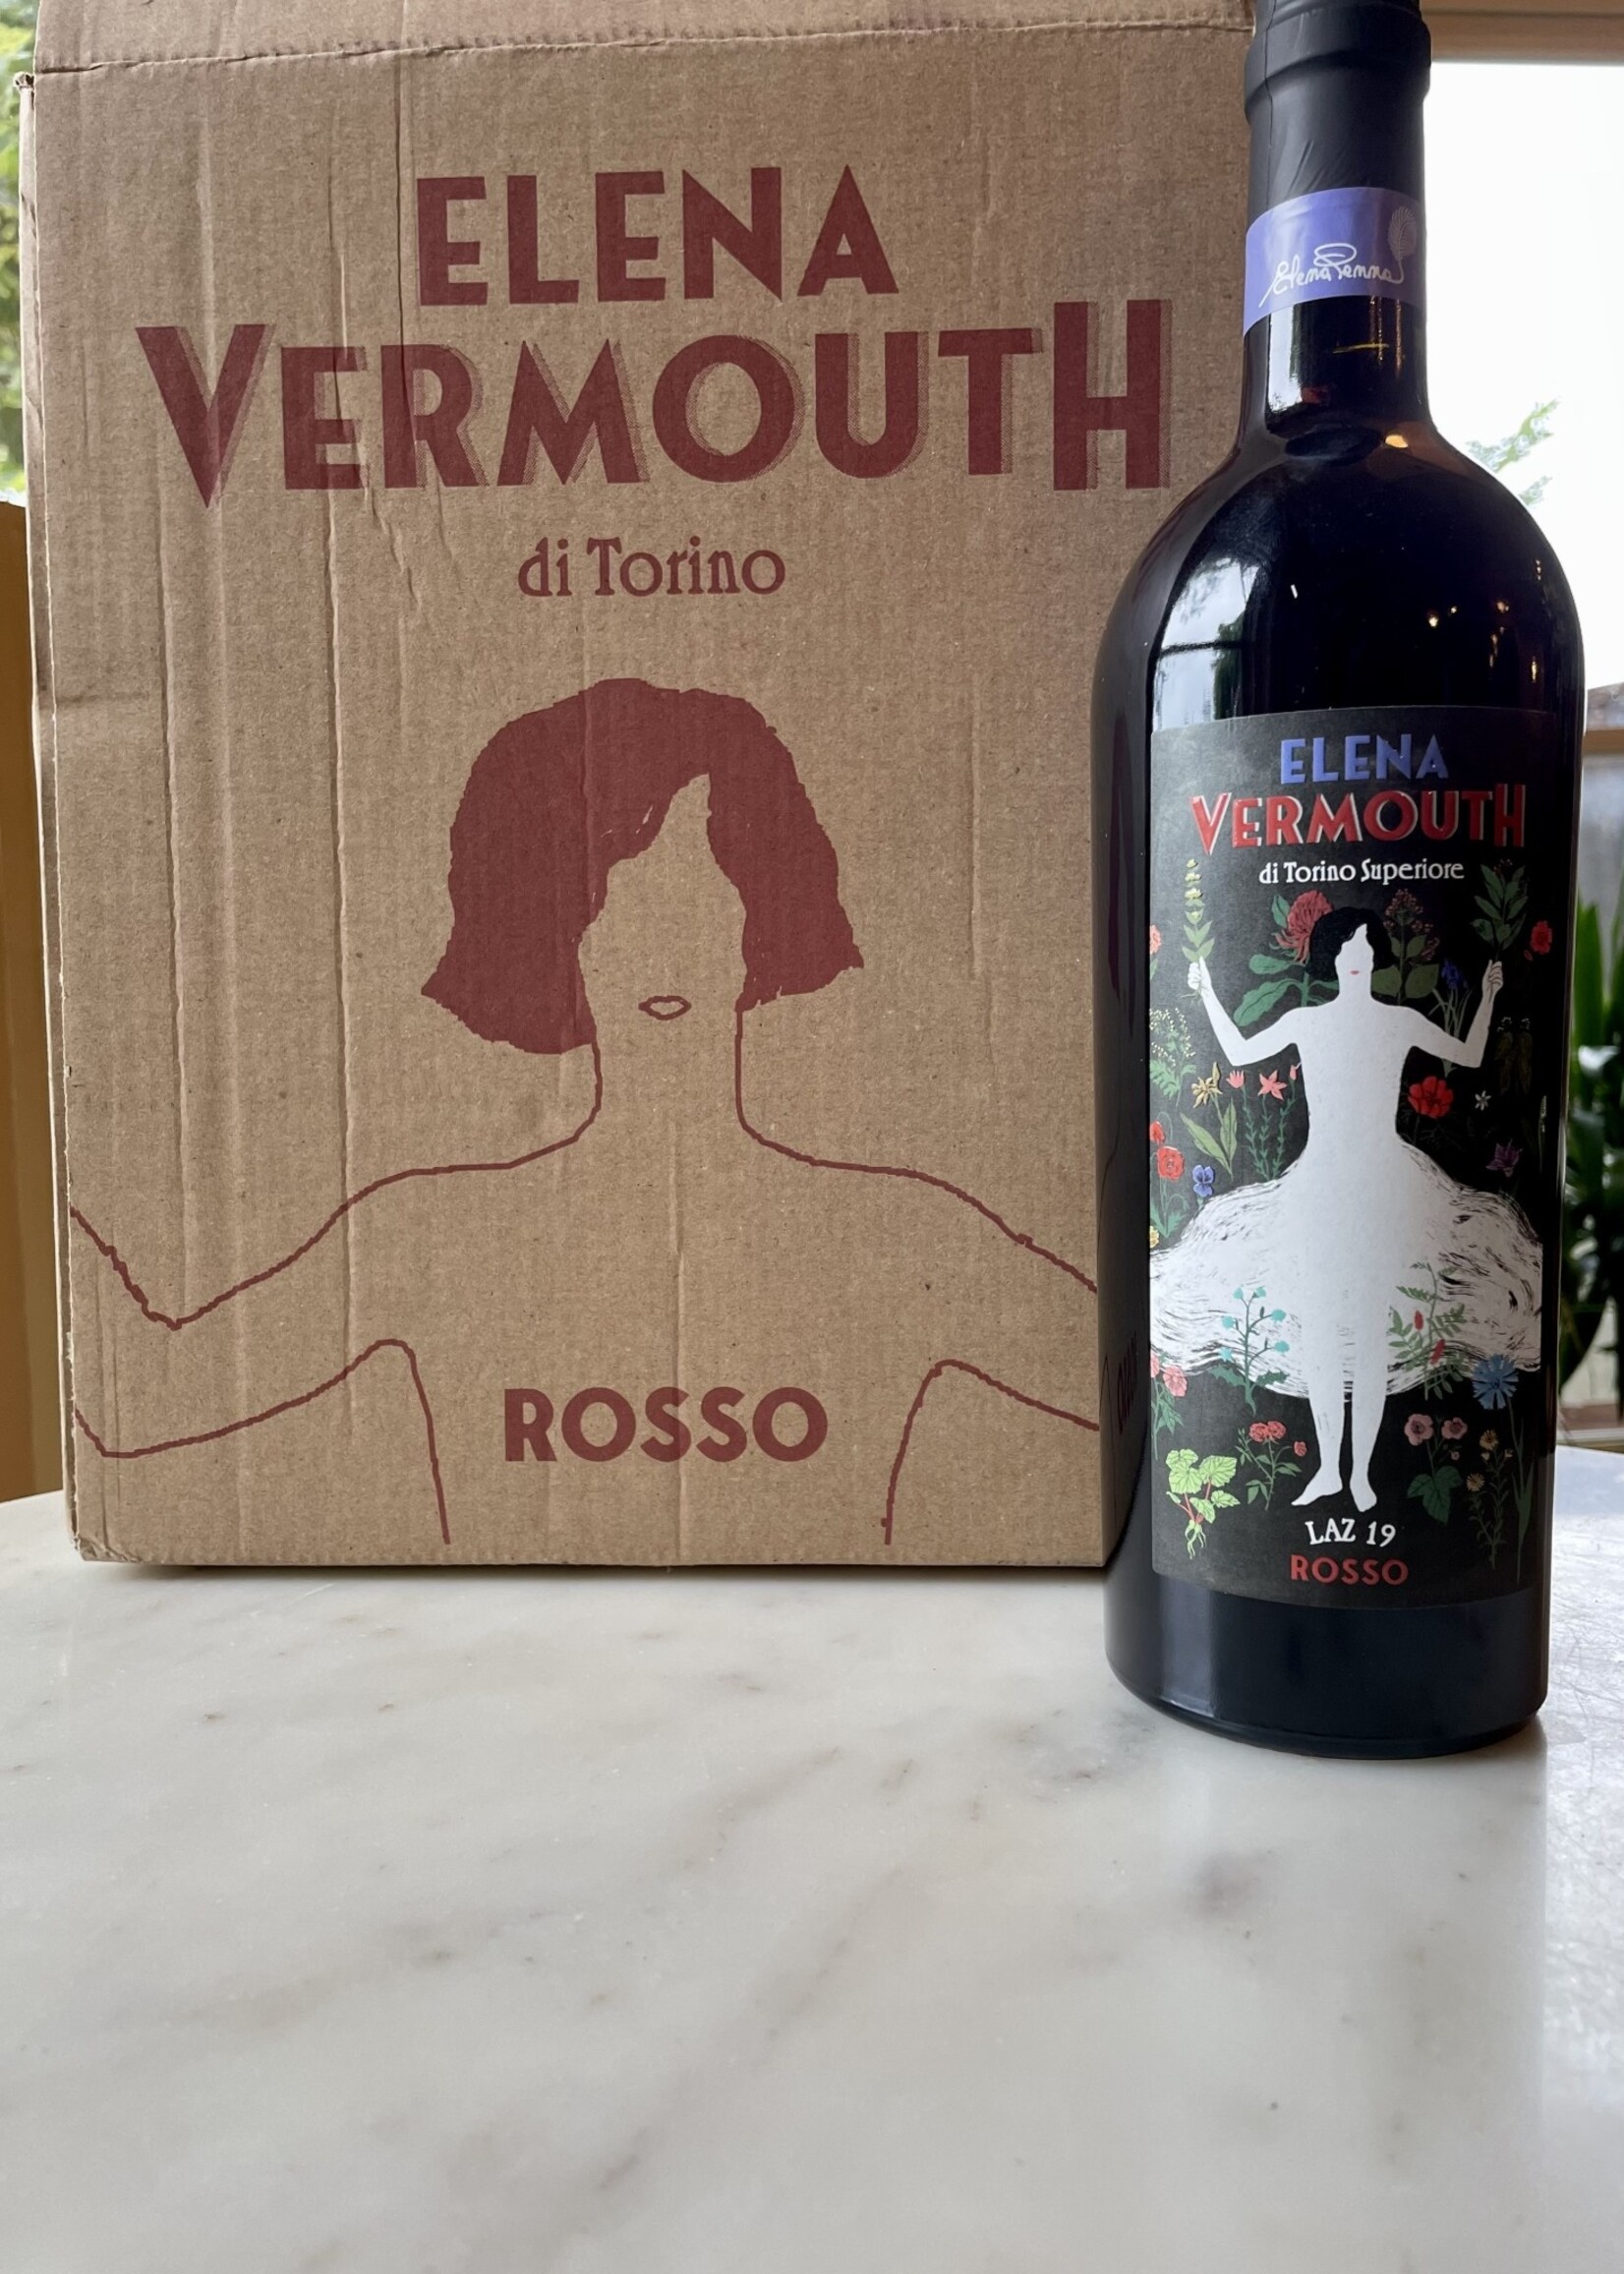 Elena Penna Vermouth di Torino Superiore Laz19 Rosso, Piedmont, Italy 2019